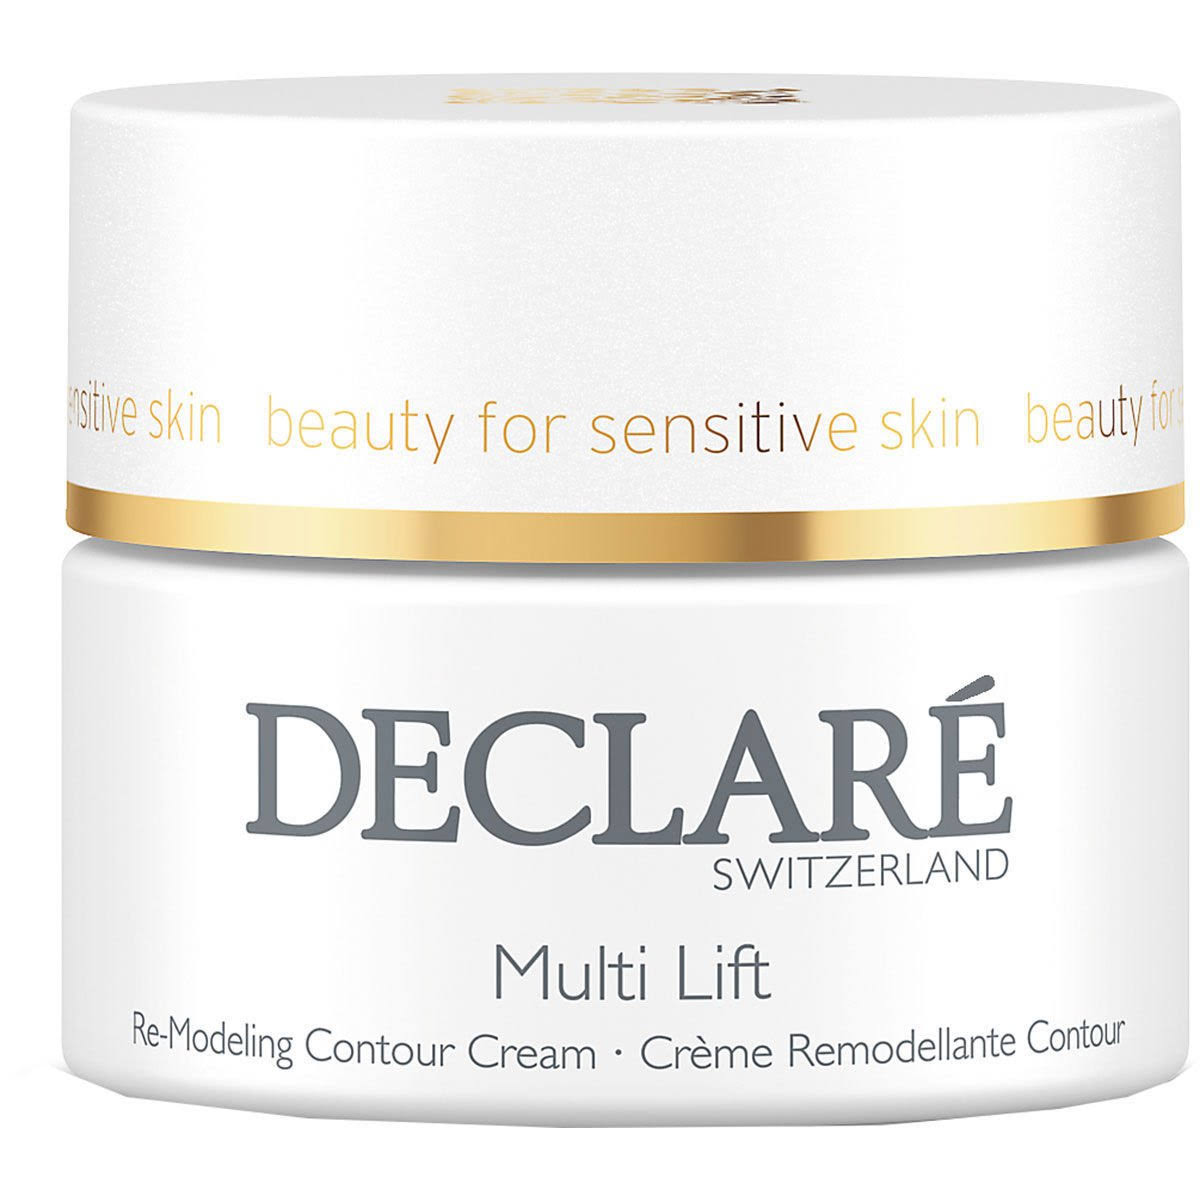 Declare Multi Lift Re-Modeling Contour Cream